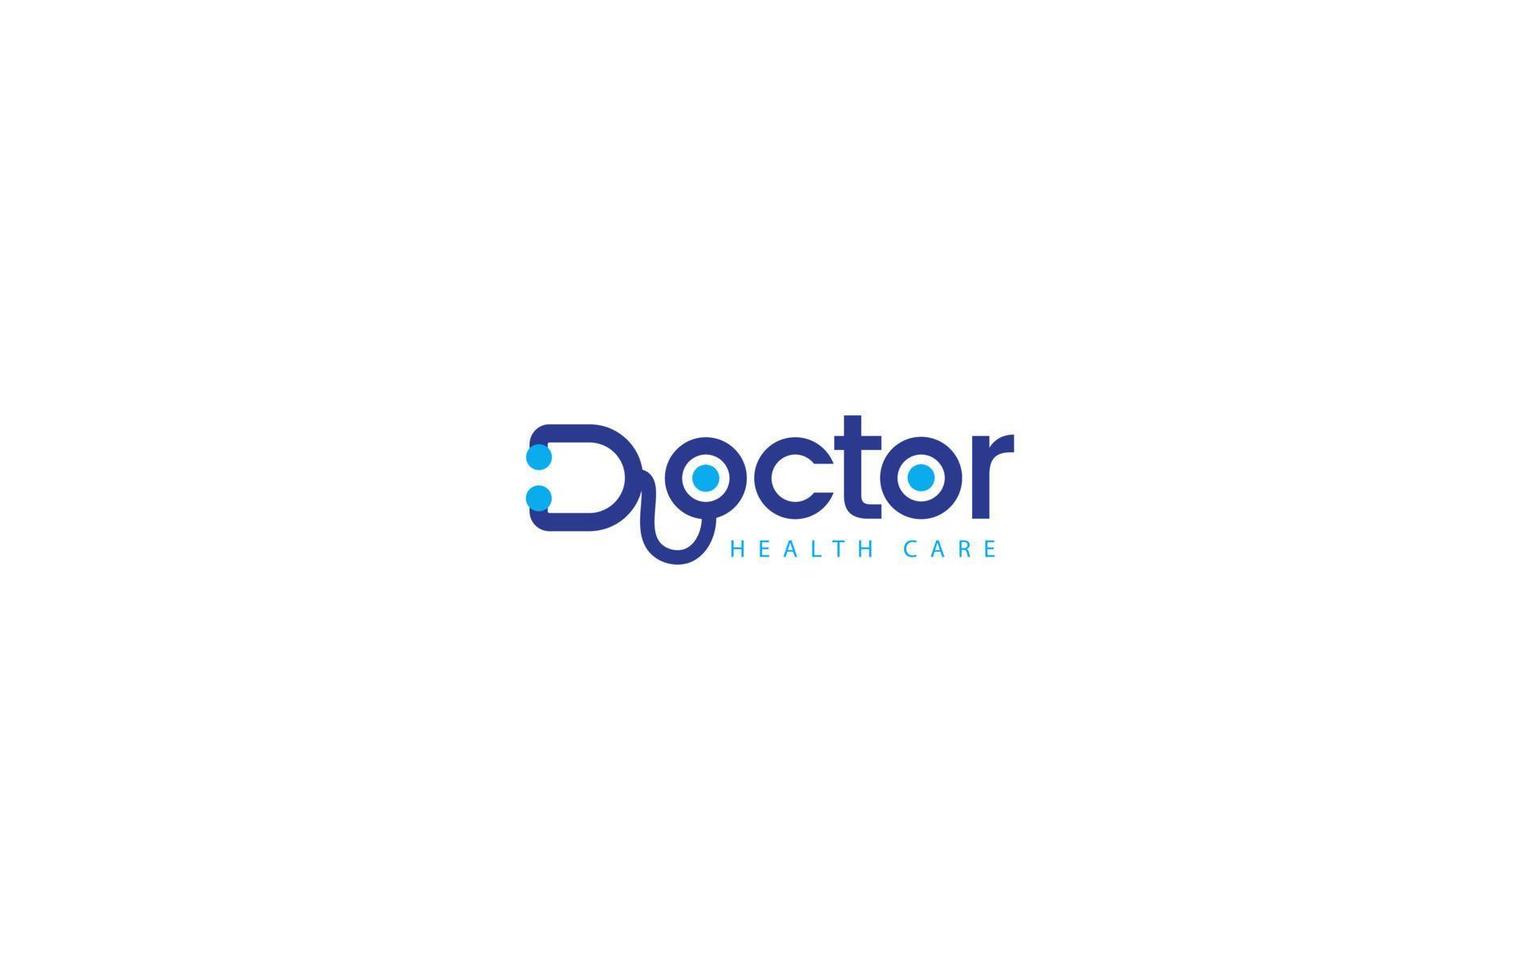 logo de médecin bleu vecteur ou modèle de logo logo dr